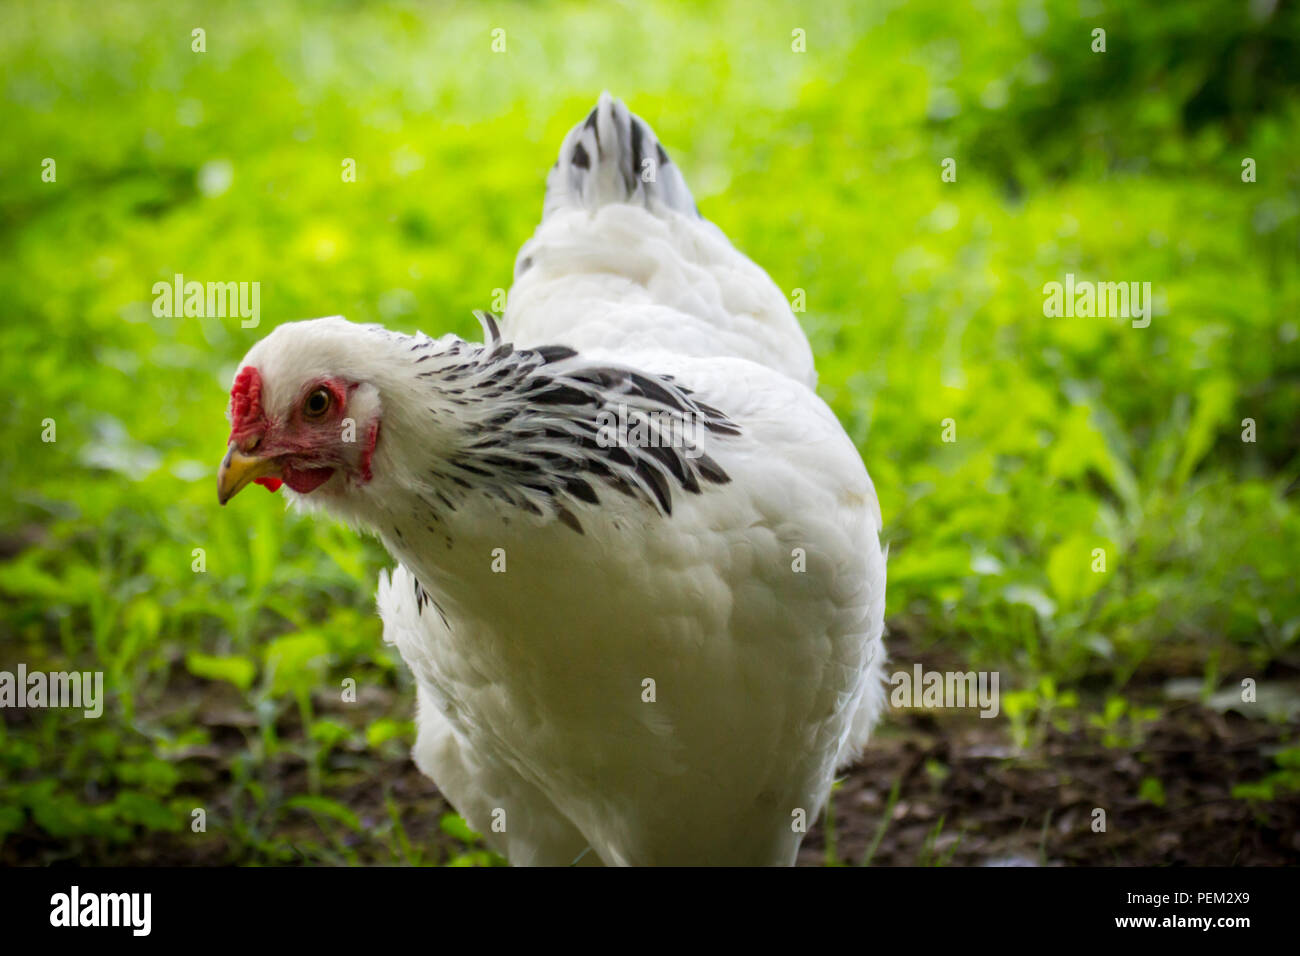 Buff Brahma Chicken Hen Stock Photo - Alamy